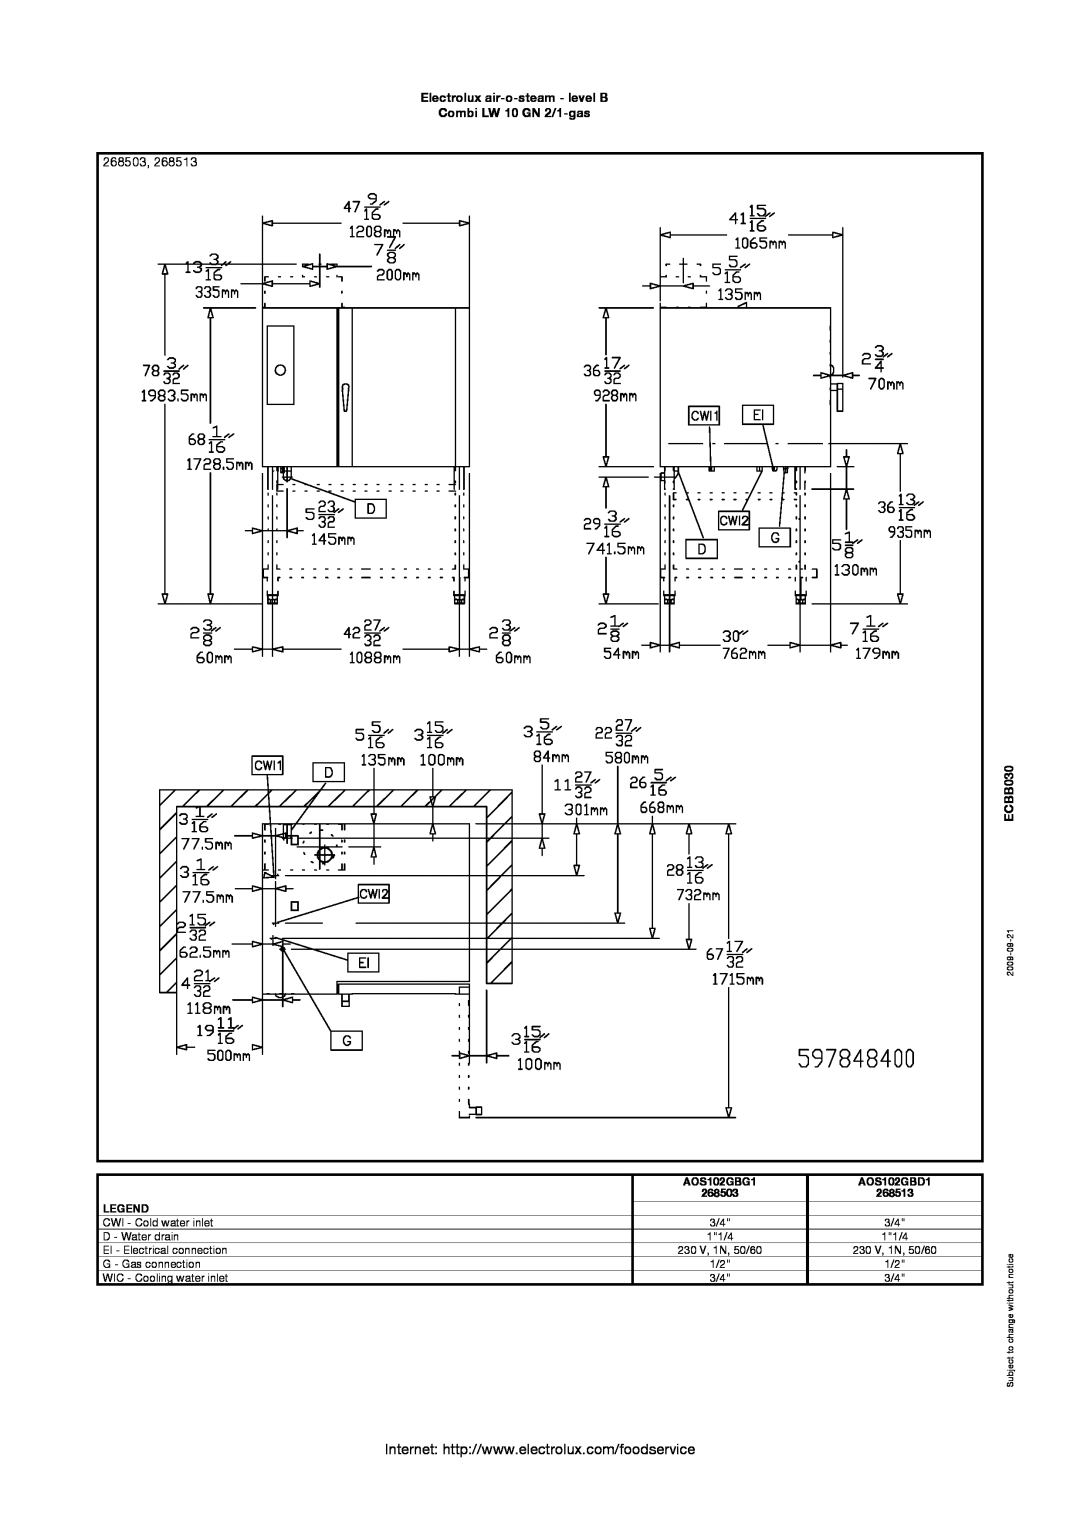 Electrolux 268503 manual Electrolux air-o-steam - level B Combi LW 10 GN 2/1-gas, ECBB030, AOS102GBG1, AOS102GBD1, 268513 